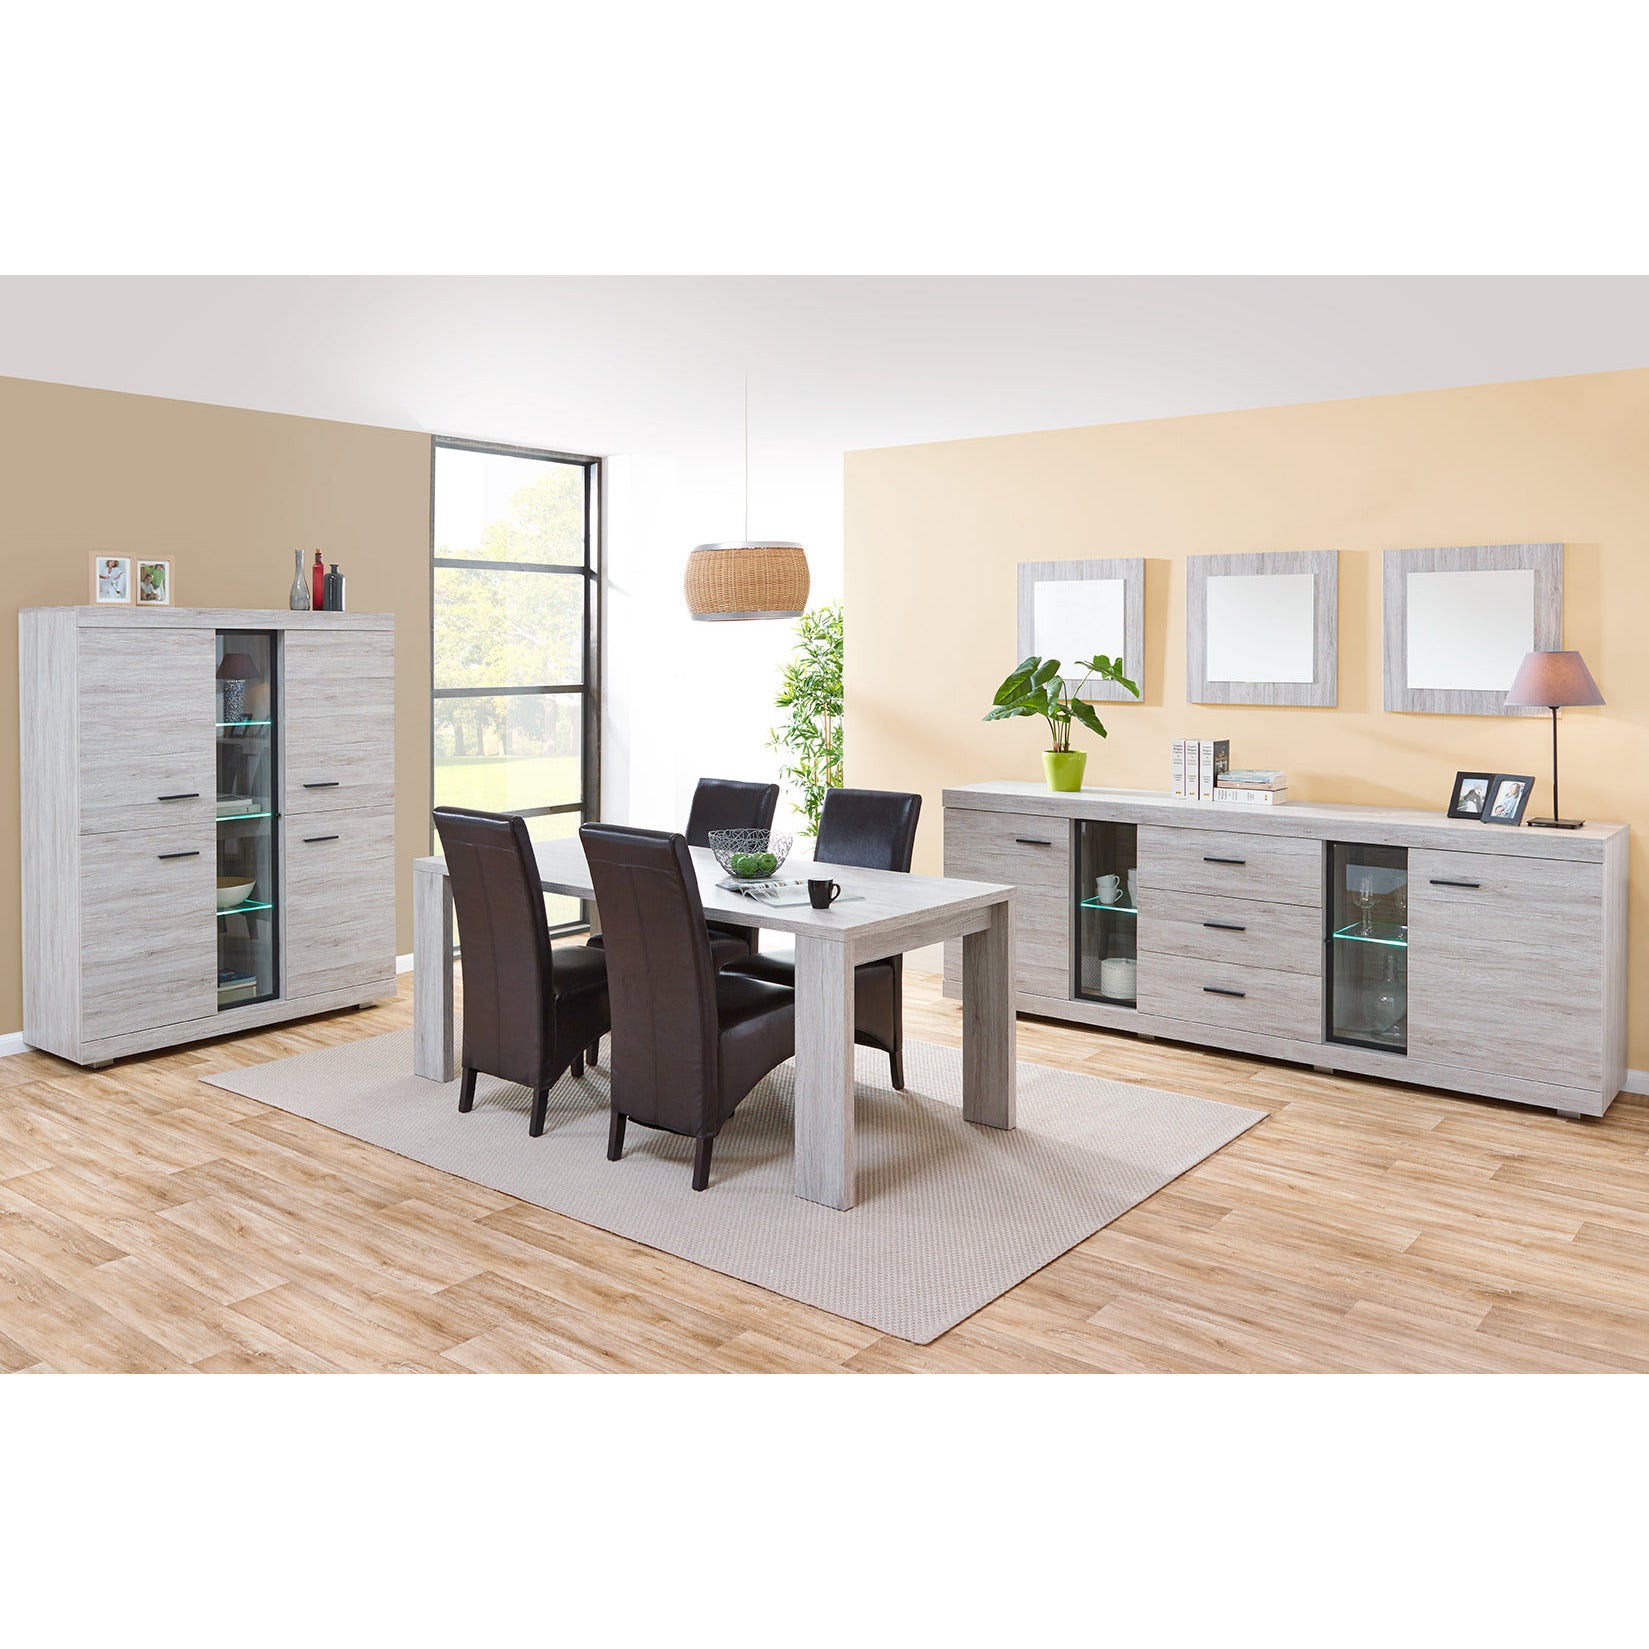 TV cabinet | Furniture series Thoma | light gray, natural | 150x